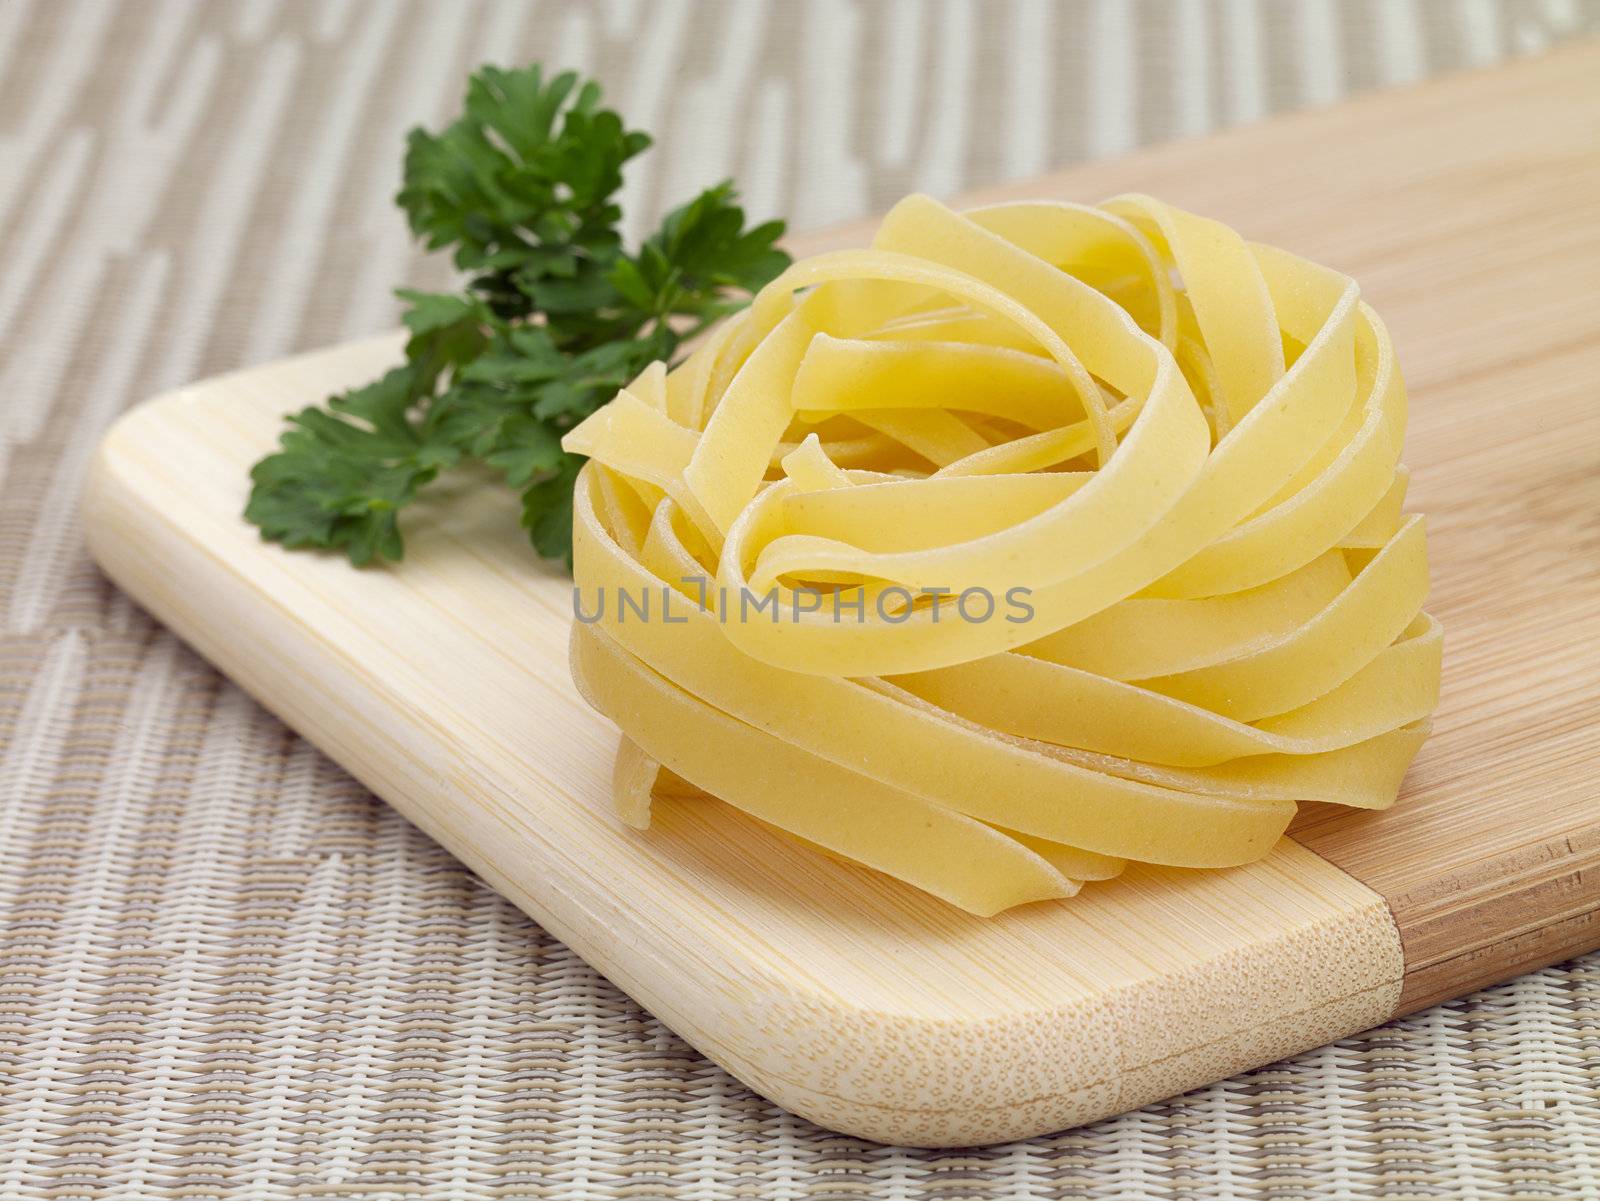 dry tagiiatelle pasta by kozzi